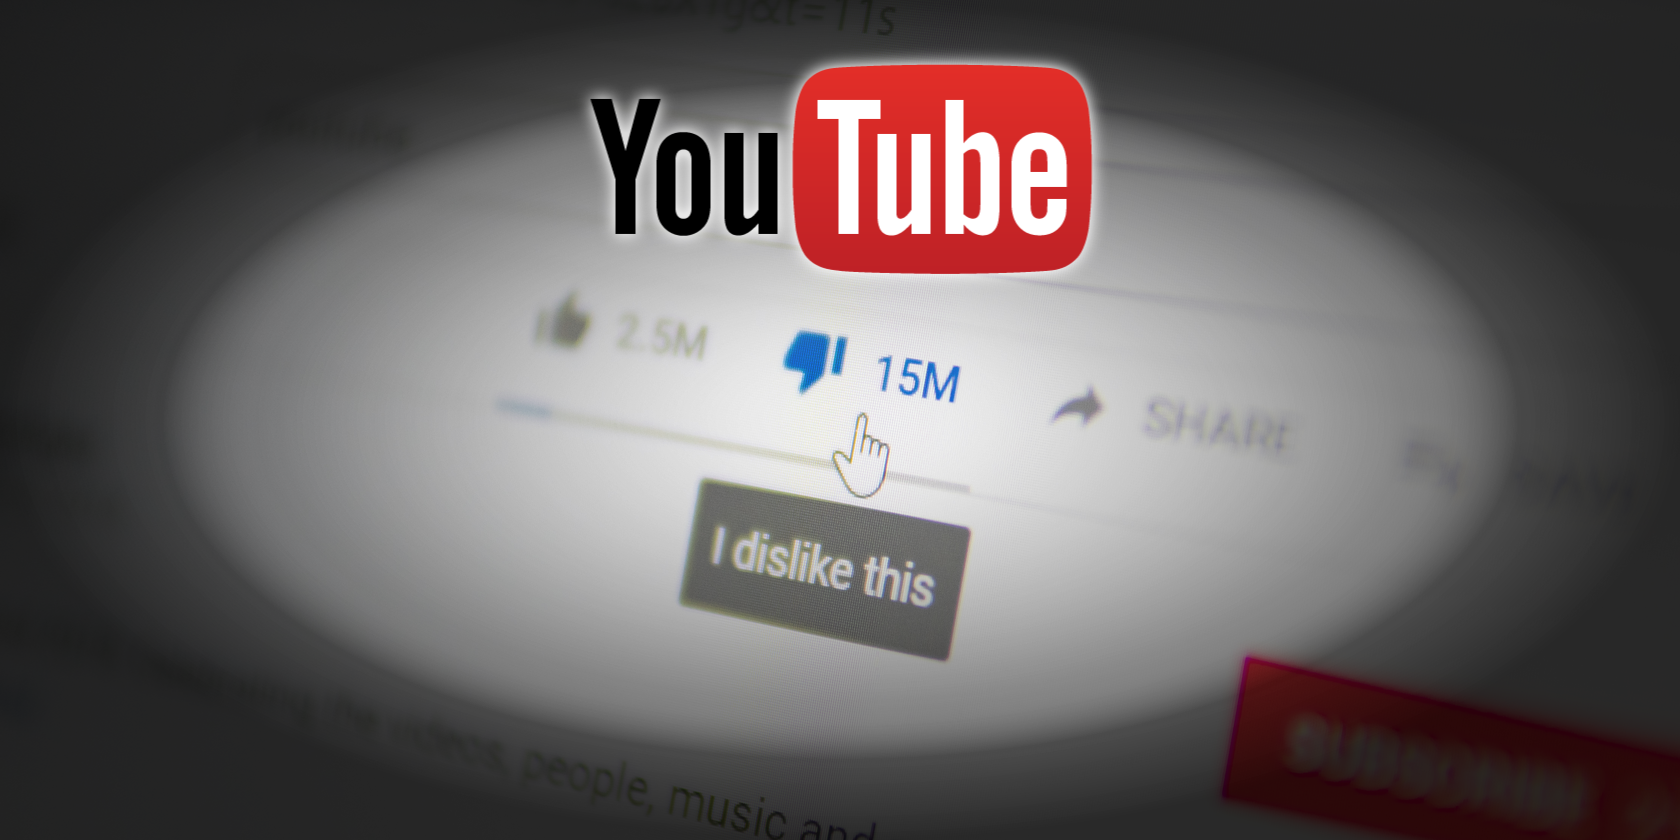 The YouTube dislike count